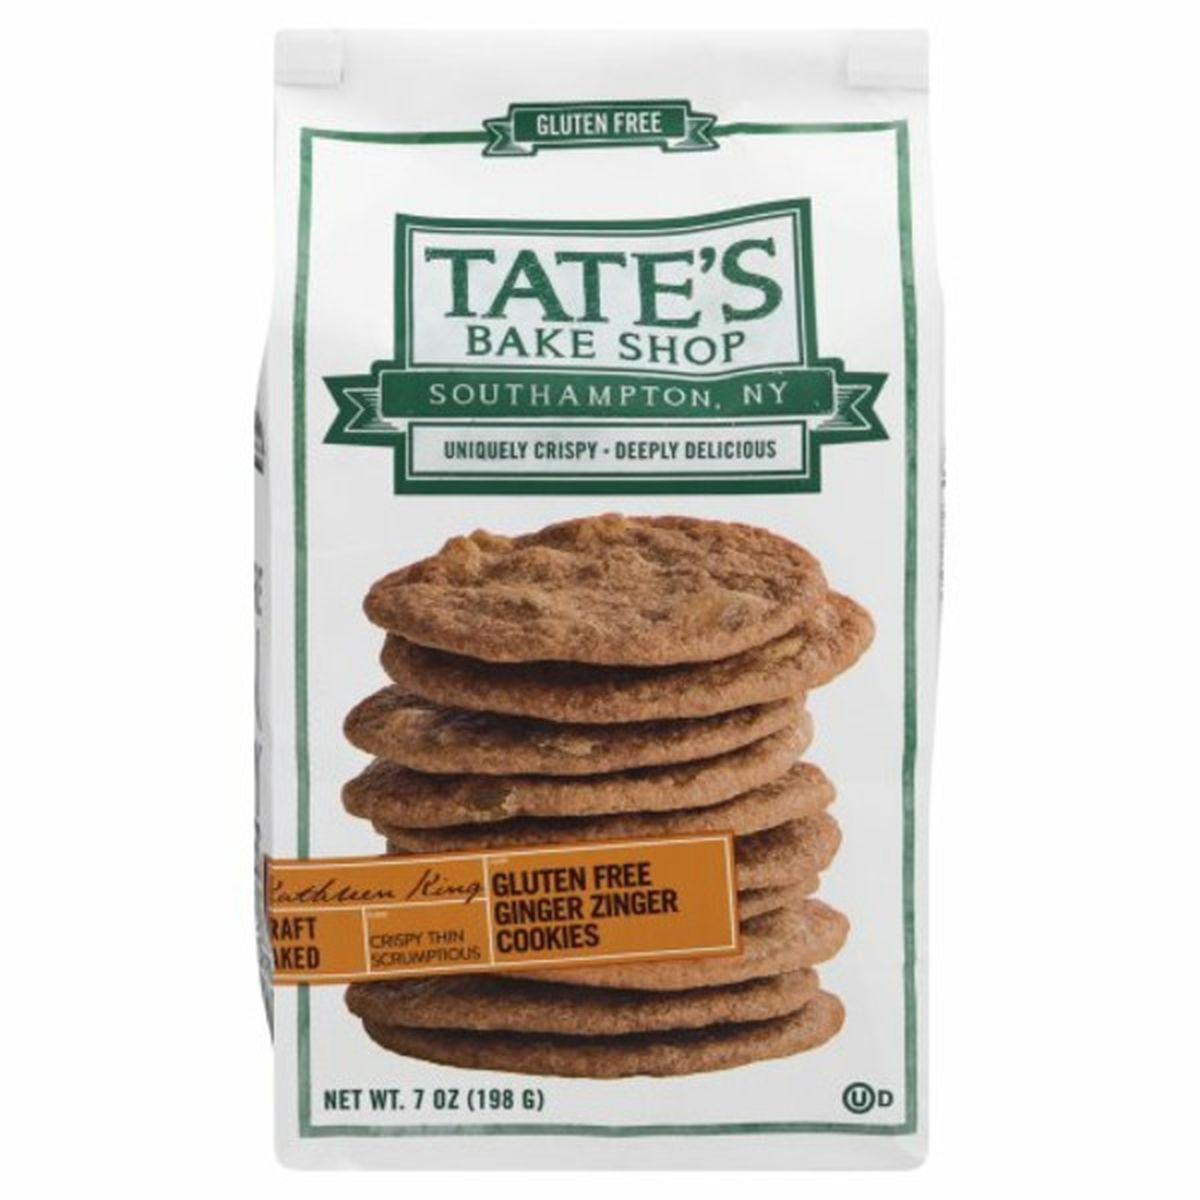 Calories in Tate's Bake Shop Cookies, Gluten Free, Ginger Zinger